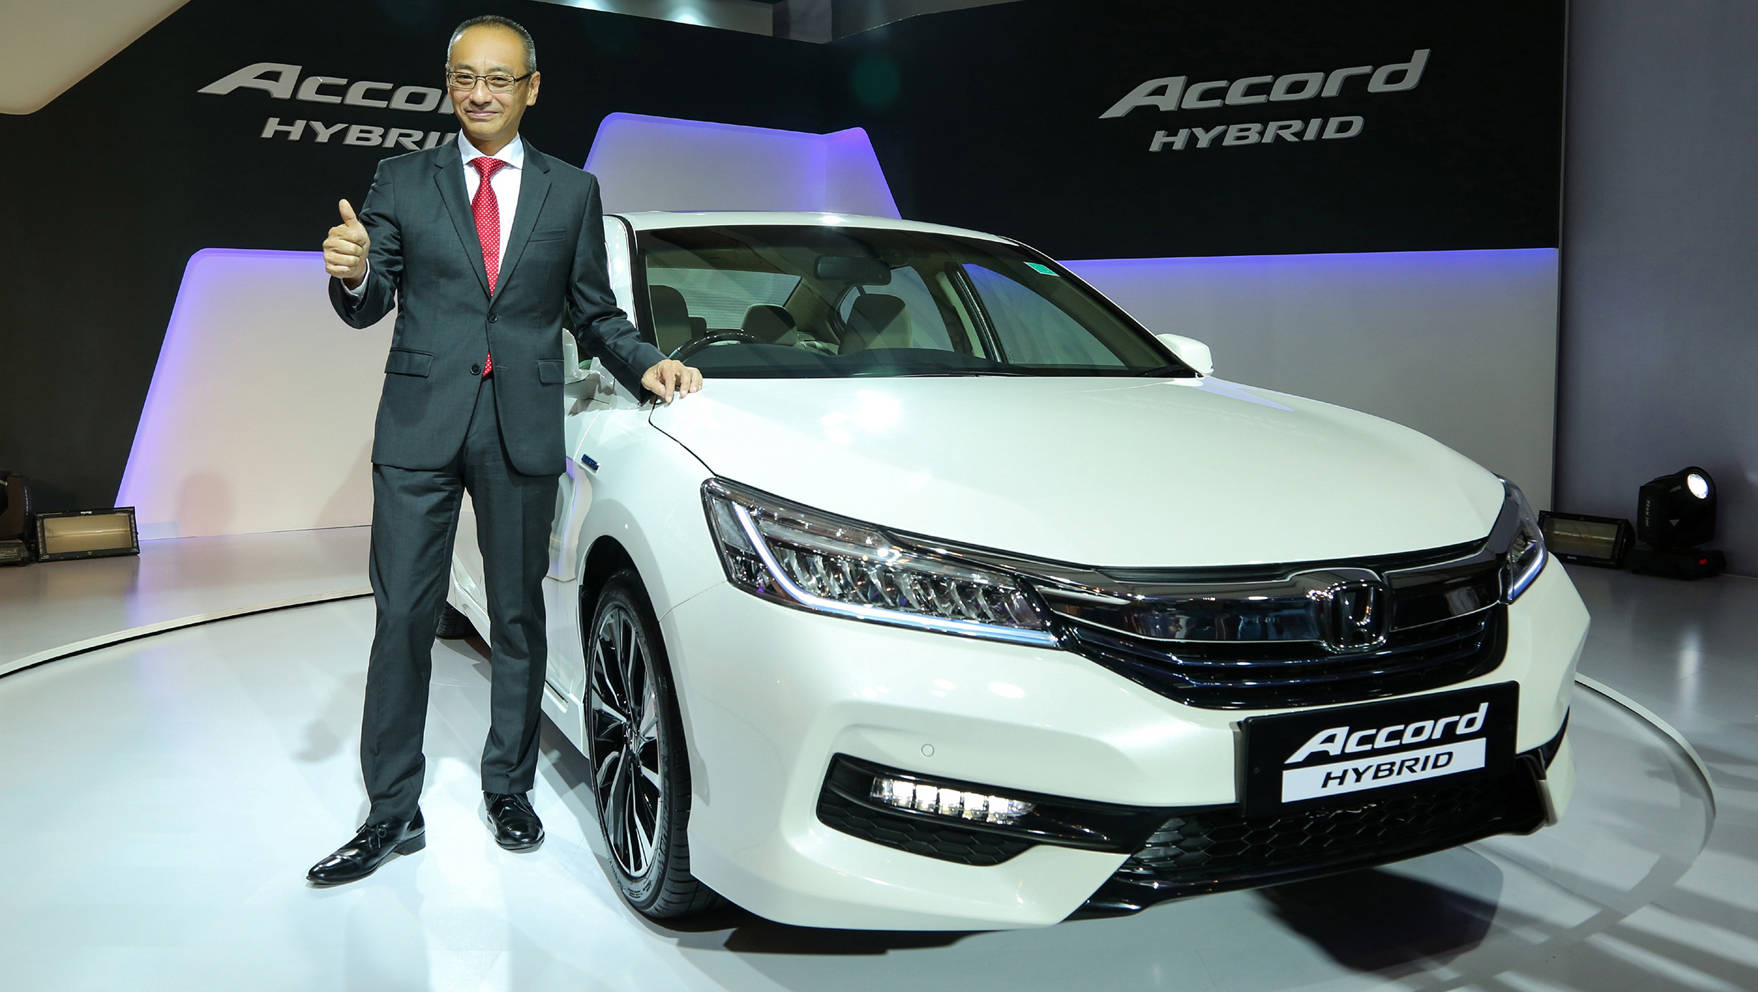 Yoichiro Ueno, president & CEO, Honda Cars India Ltd at the launch of Honda Accord Hybrid in India